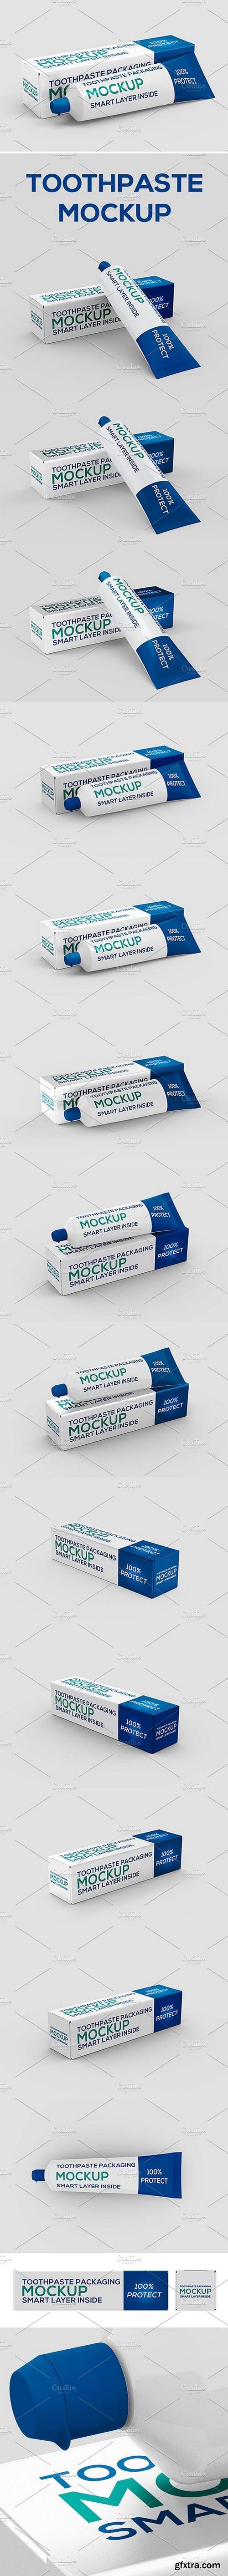 CM - Toothpaste Packaging Mock-up 1617302